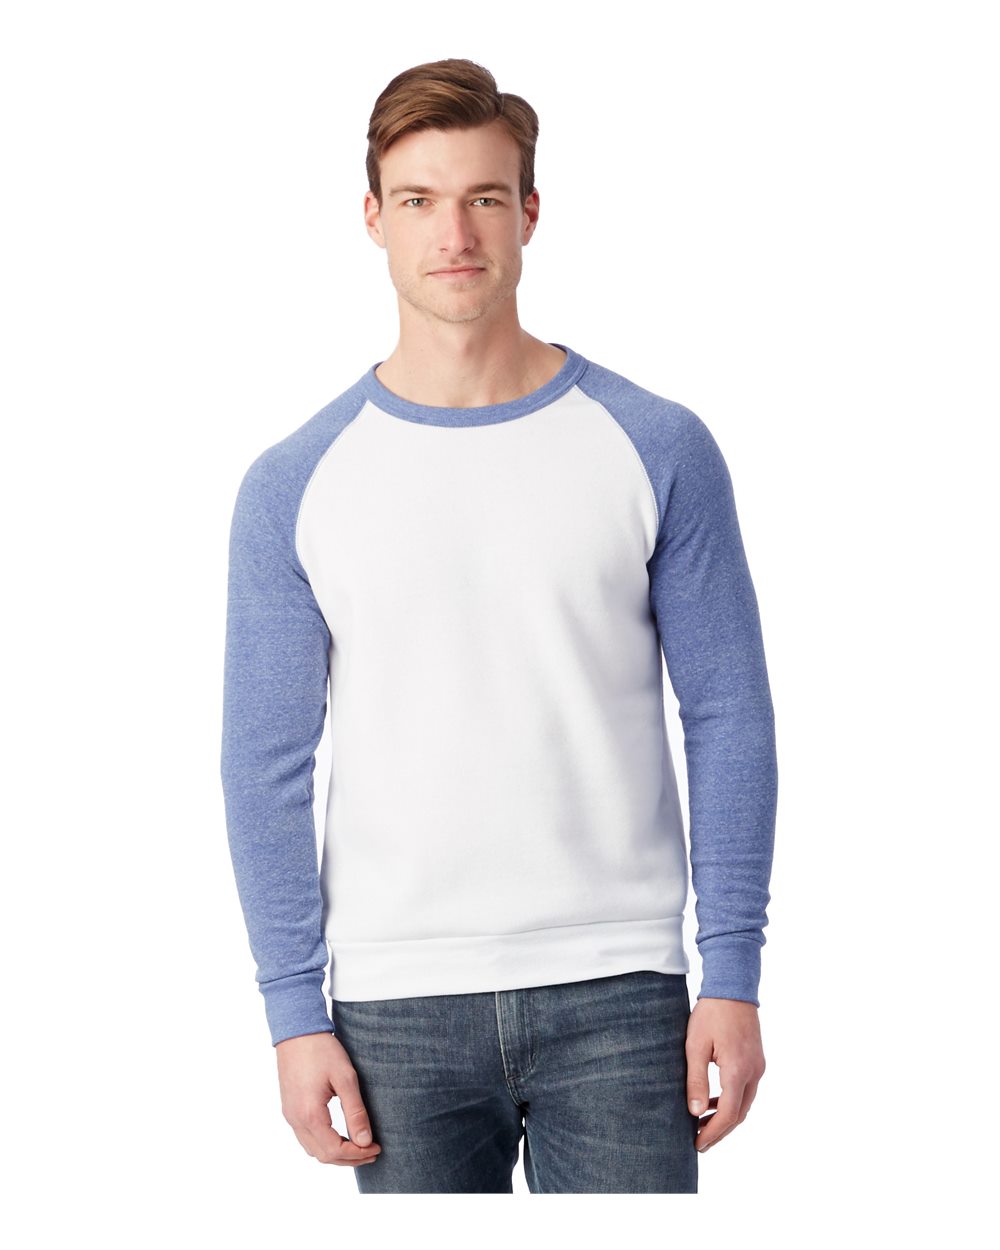 Champ Eco-Fleece Colorblocked Sweatshirt-Alternative